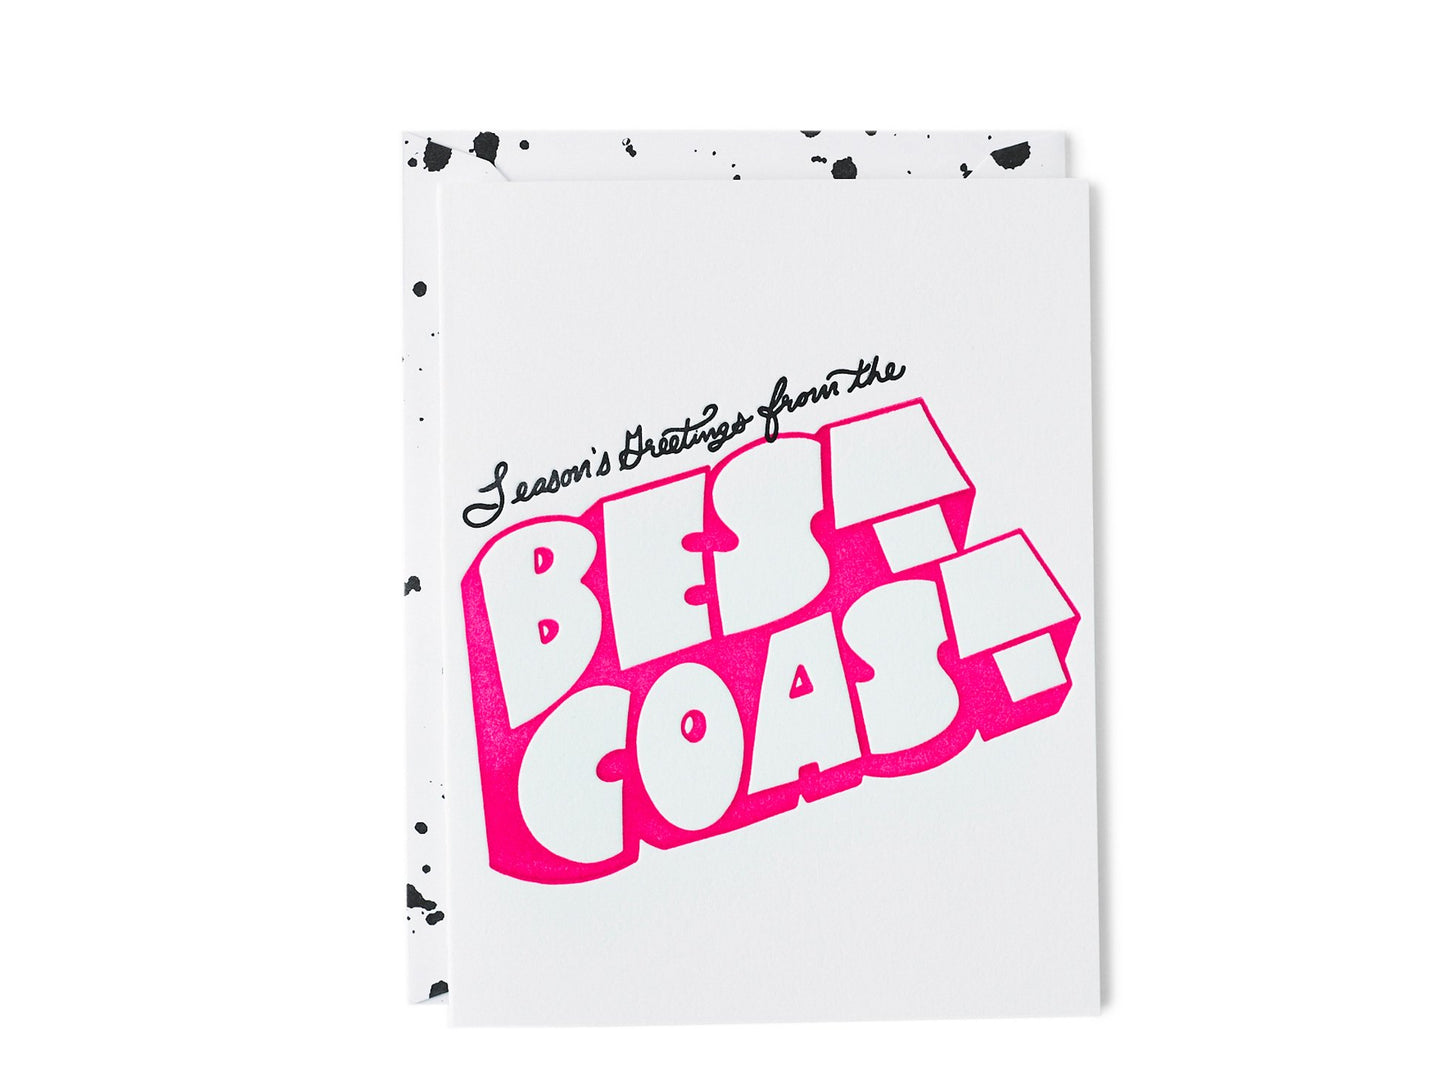 Best Coast Holiday Card